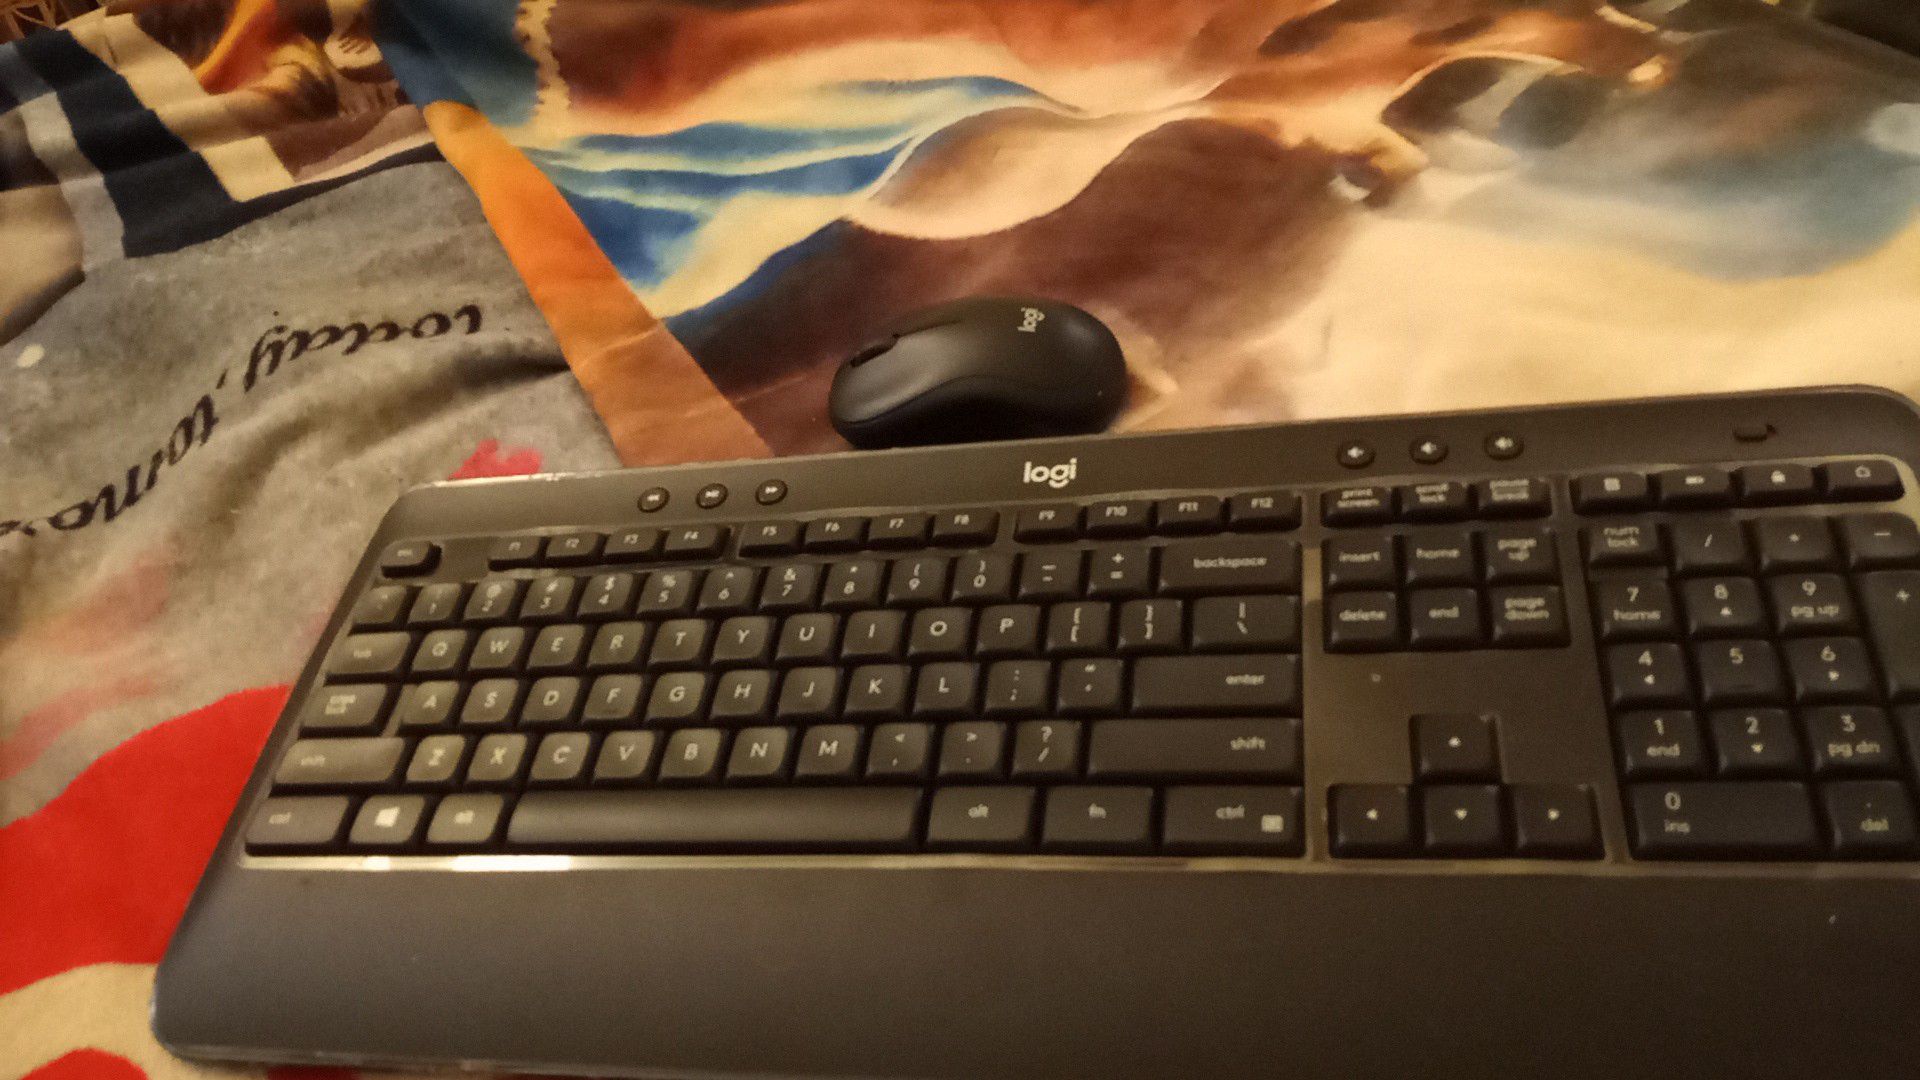 Logic wireless keyboard and mouse